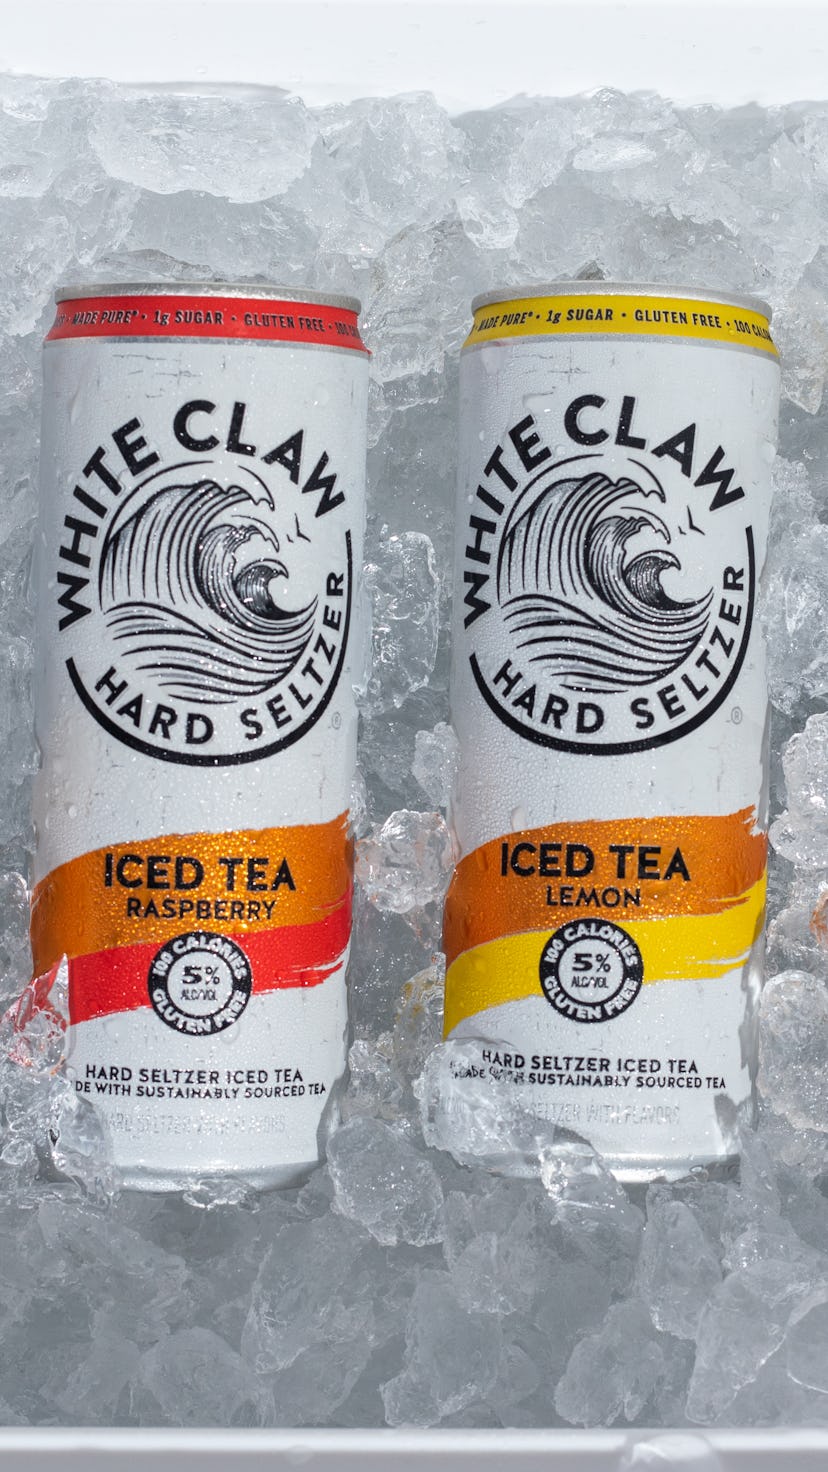 How do White Claw Iced Tea and Truly Iced Tea compare? 